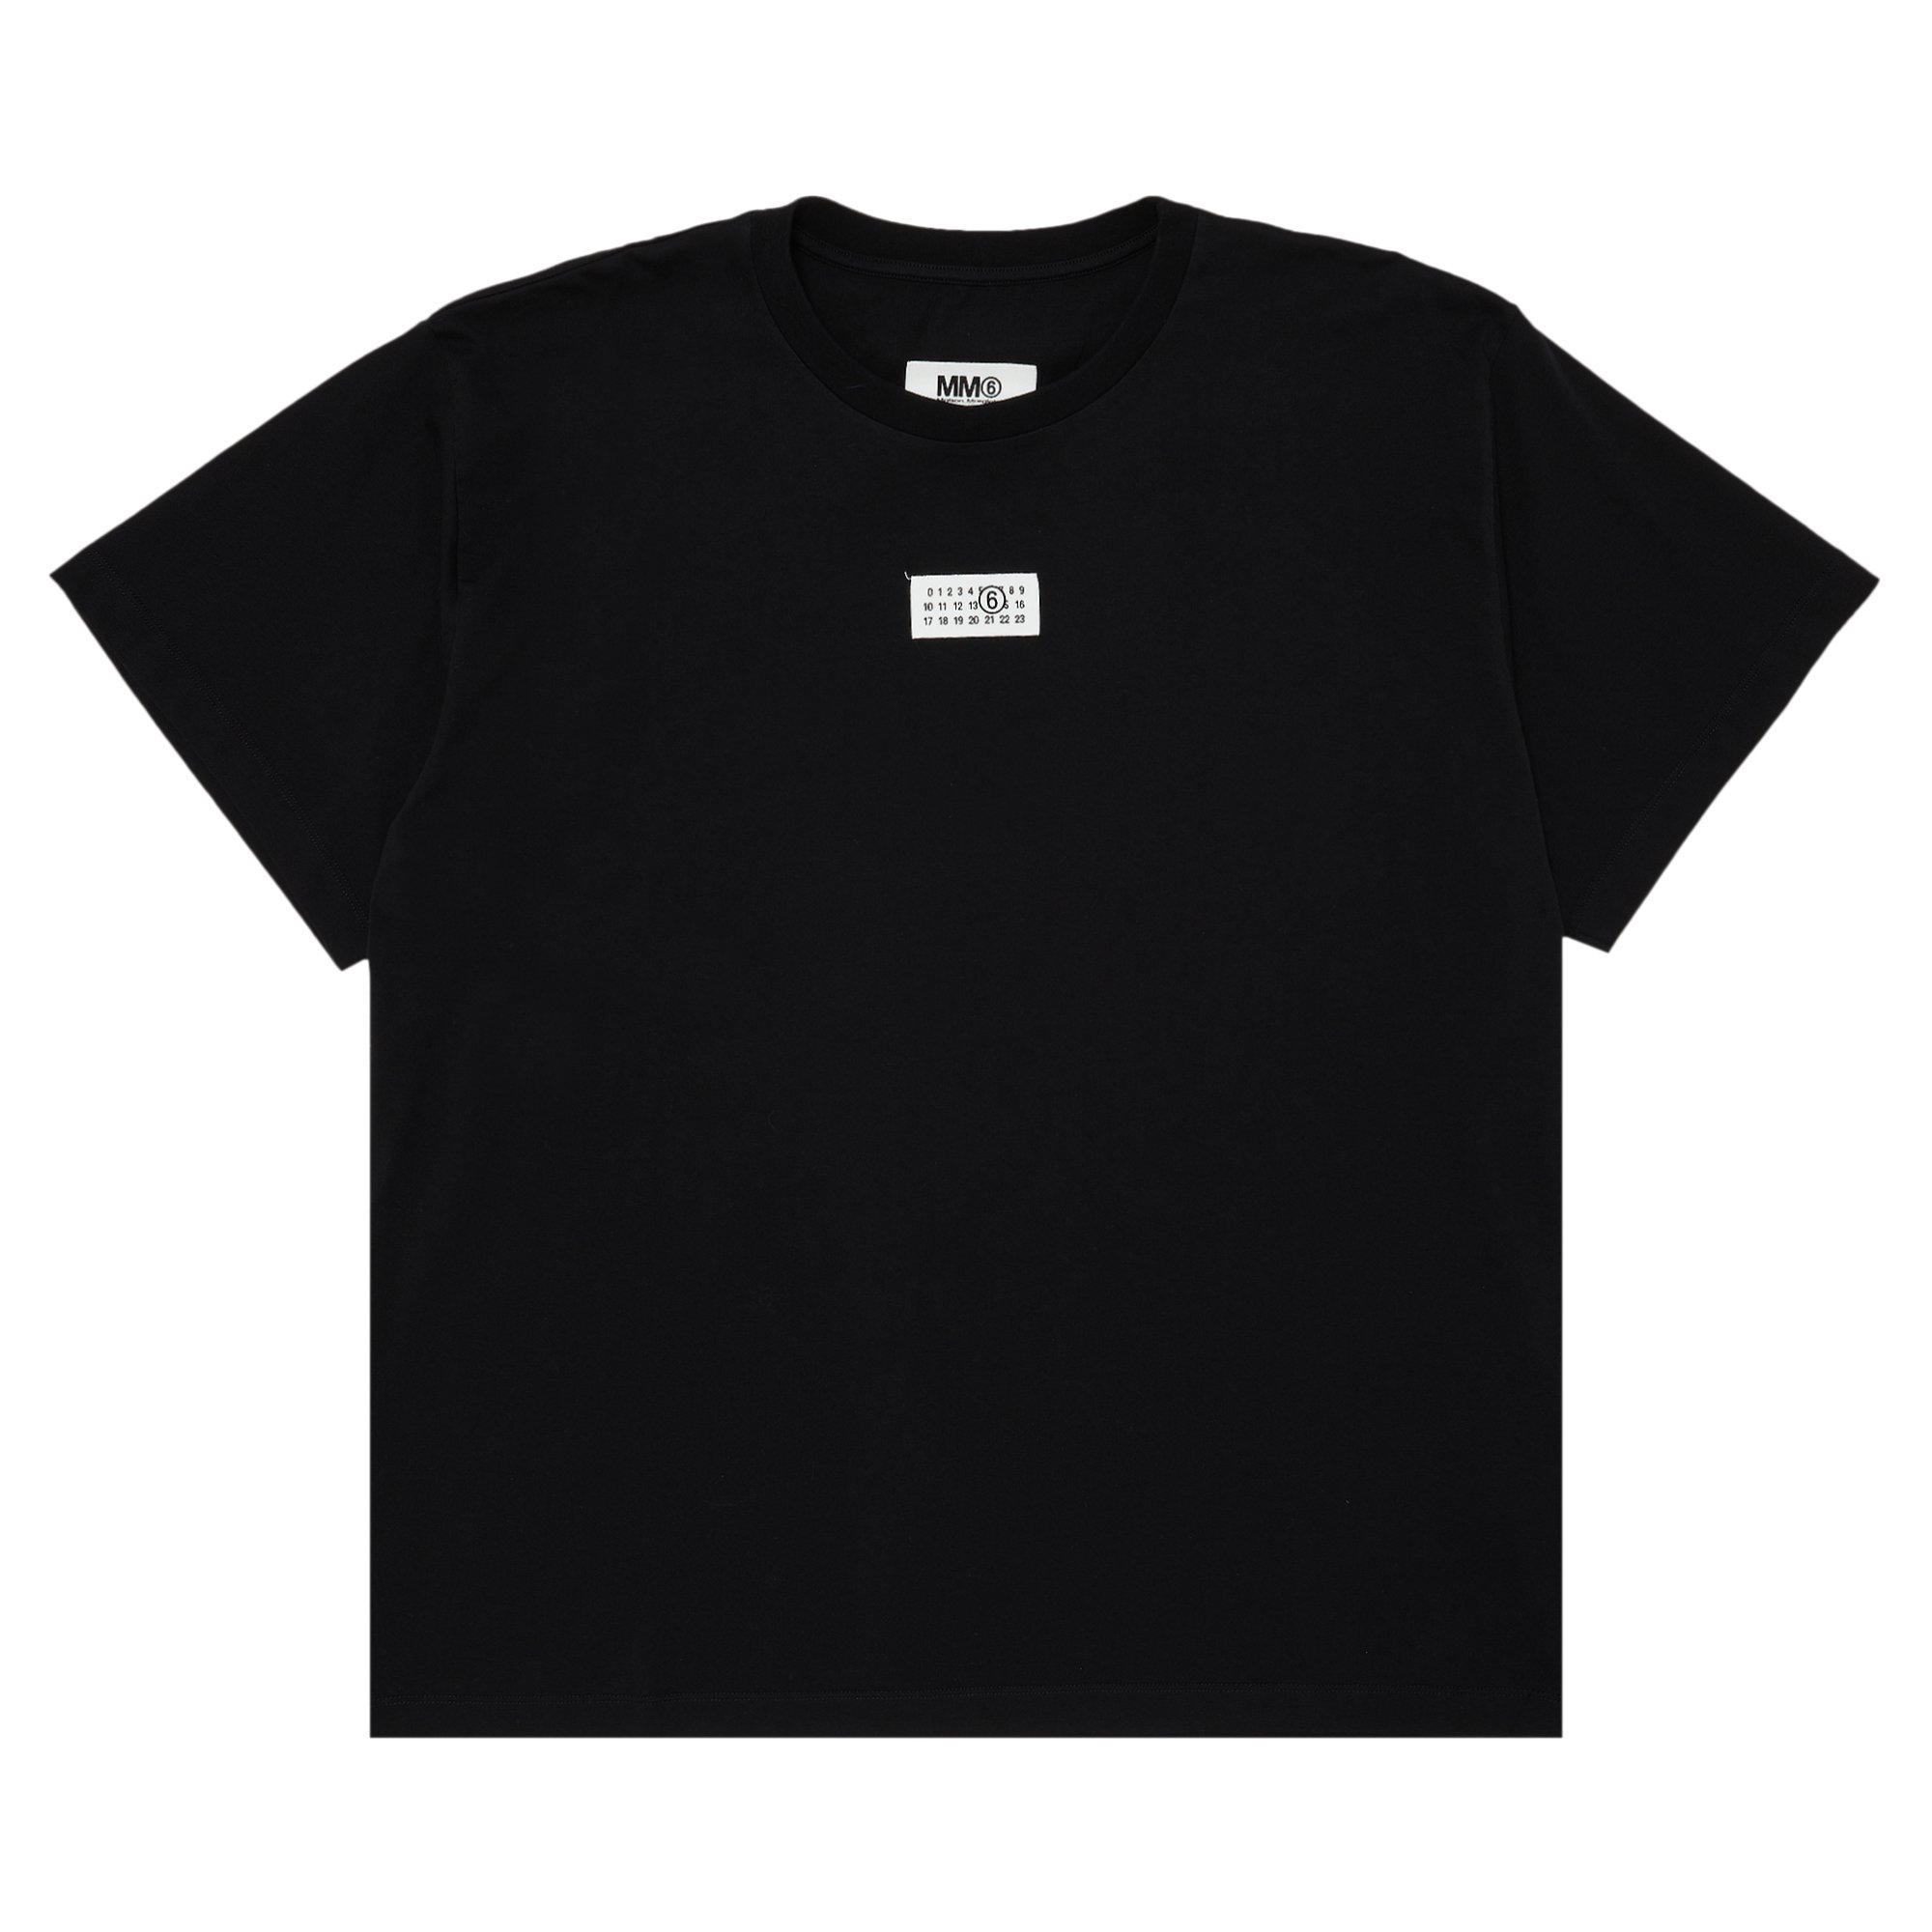 Buy MM6 Maison Margiela T-Shirt 'Black' - S52GC0300 S24311 900